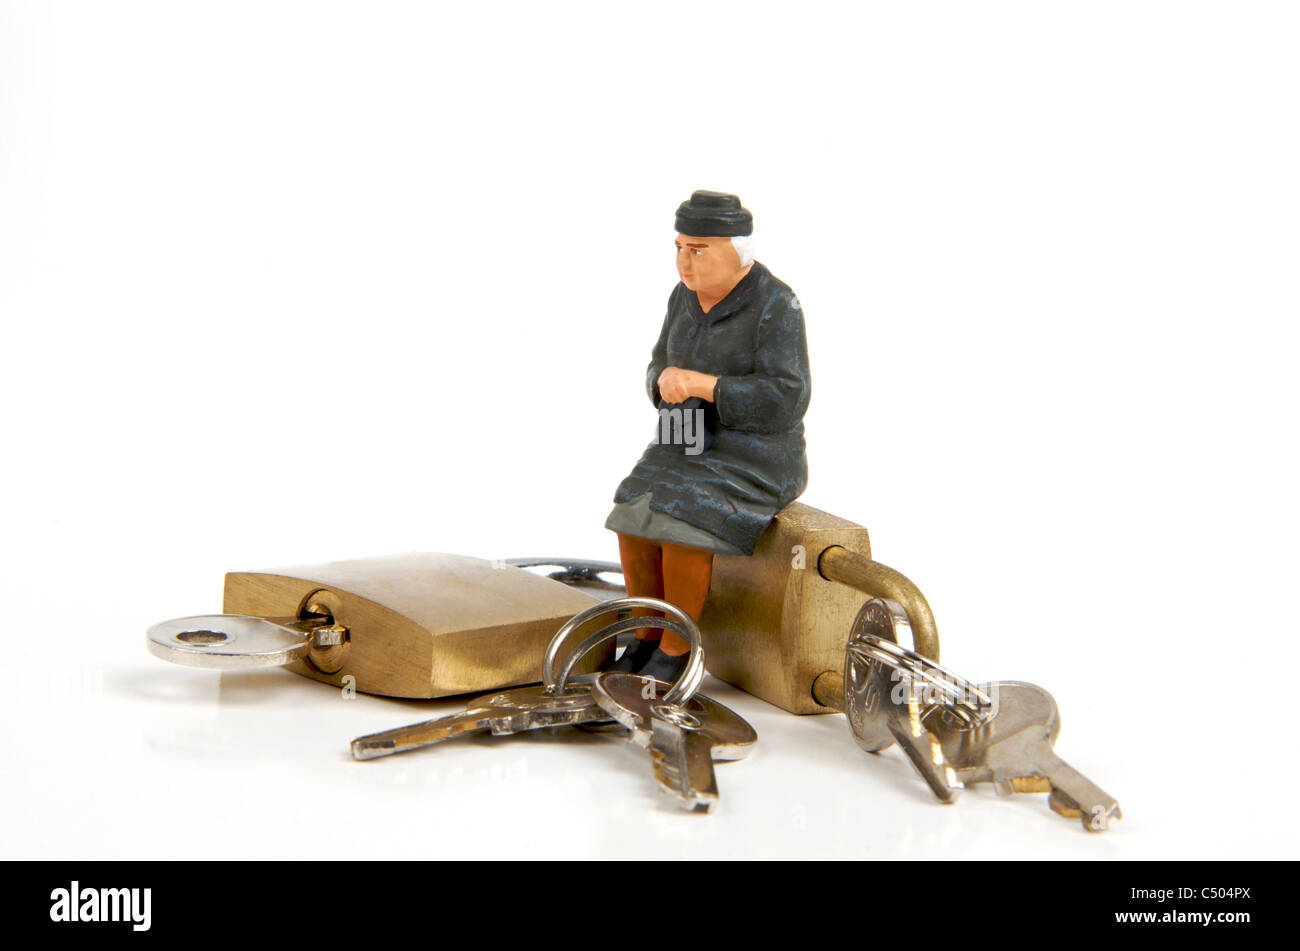 Miniature figurine of elderly lady sitting on padlocks - retirement / security / housing concept Stock Photo